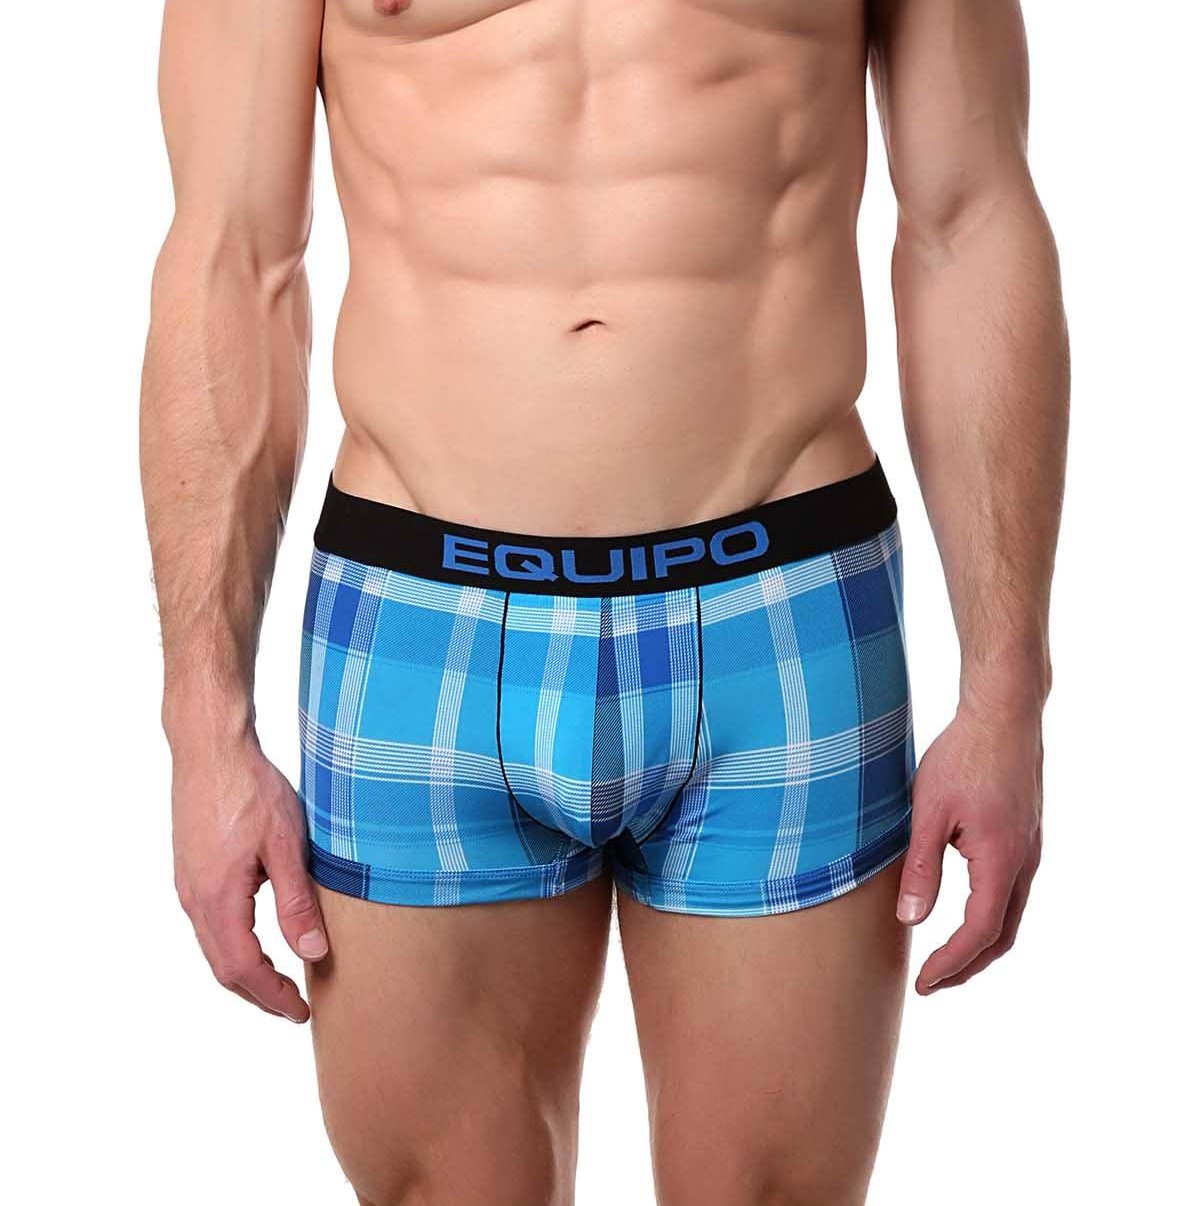 11 Best Equipo Underwear For Men for 2023